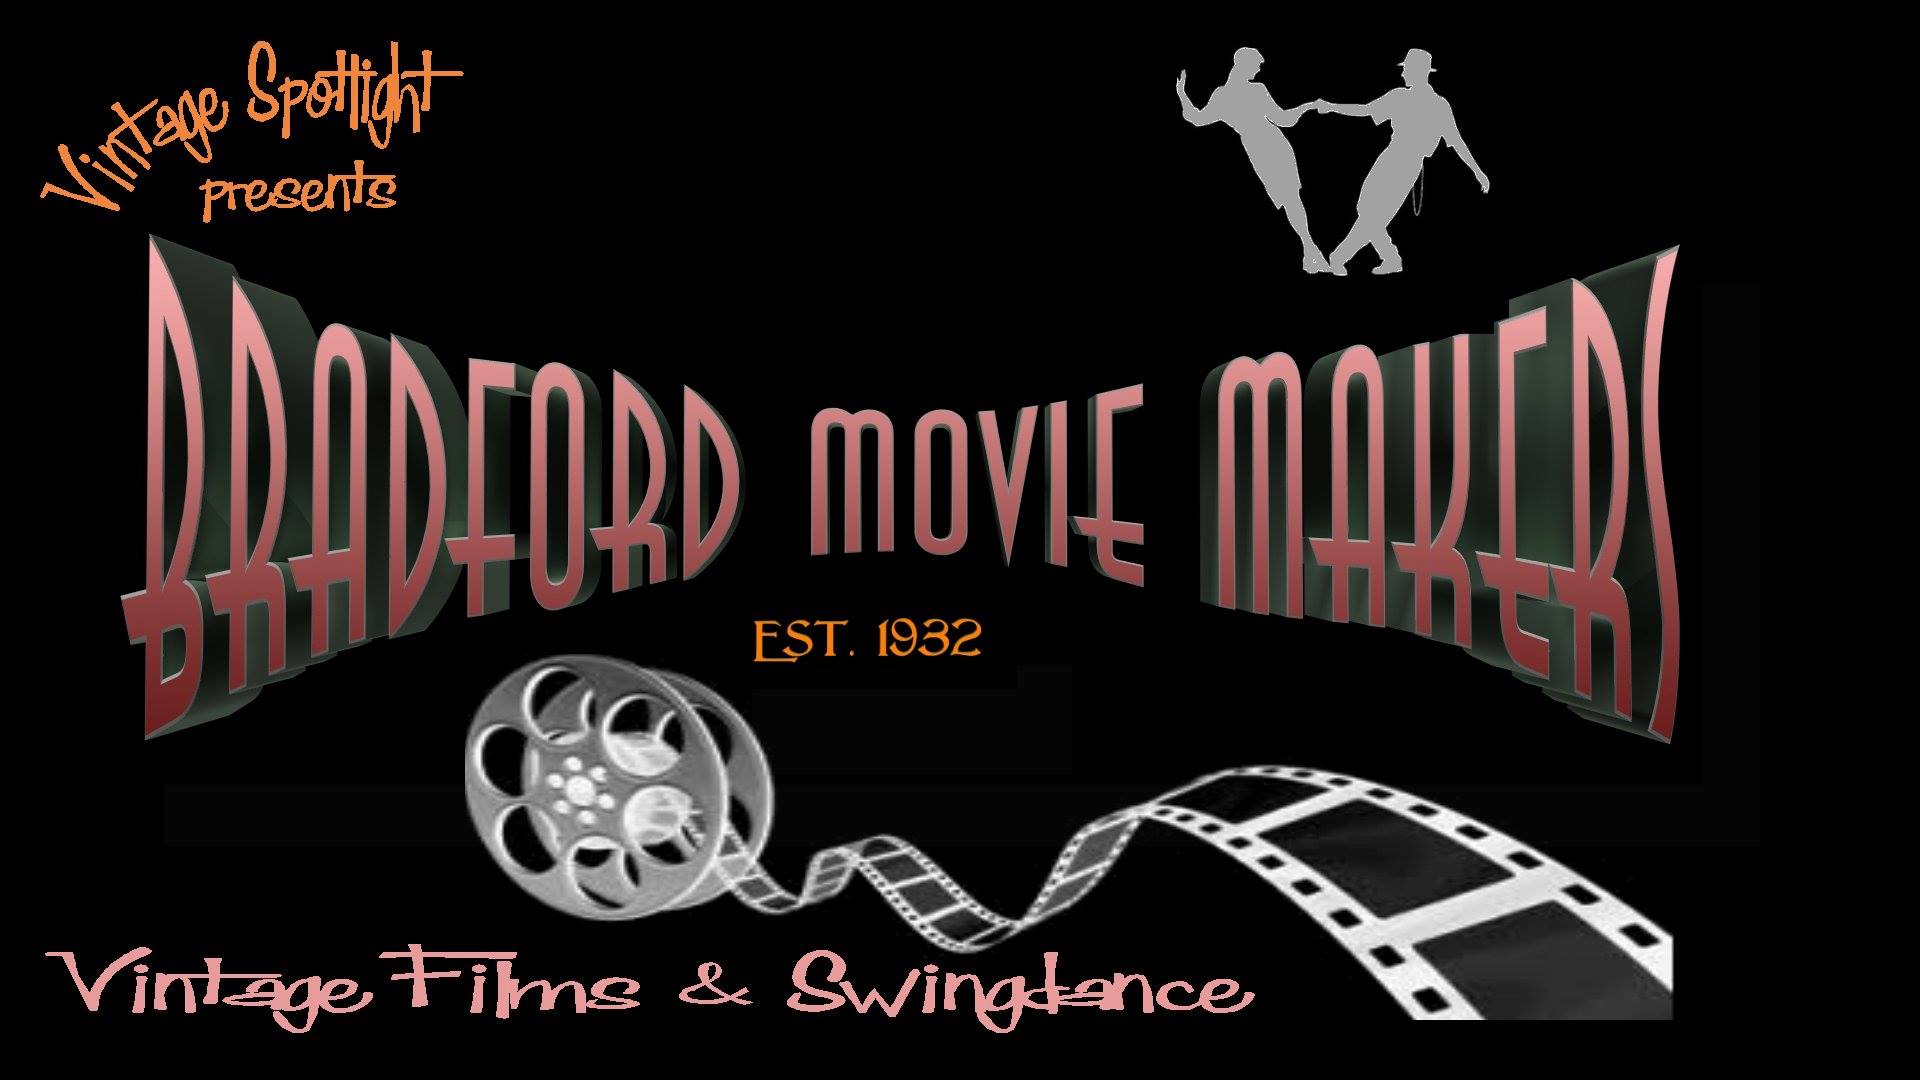 Vintage Film & Swingdance events